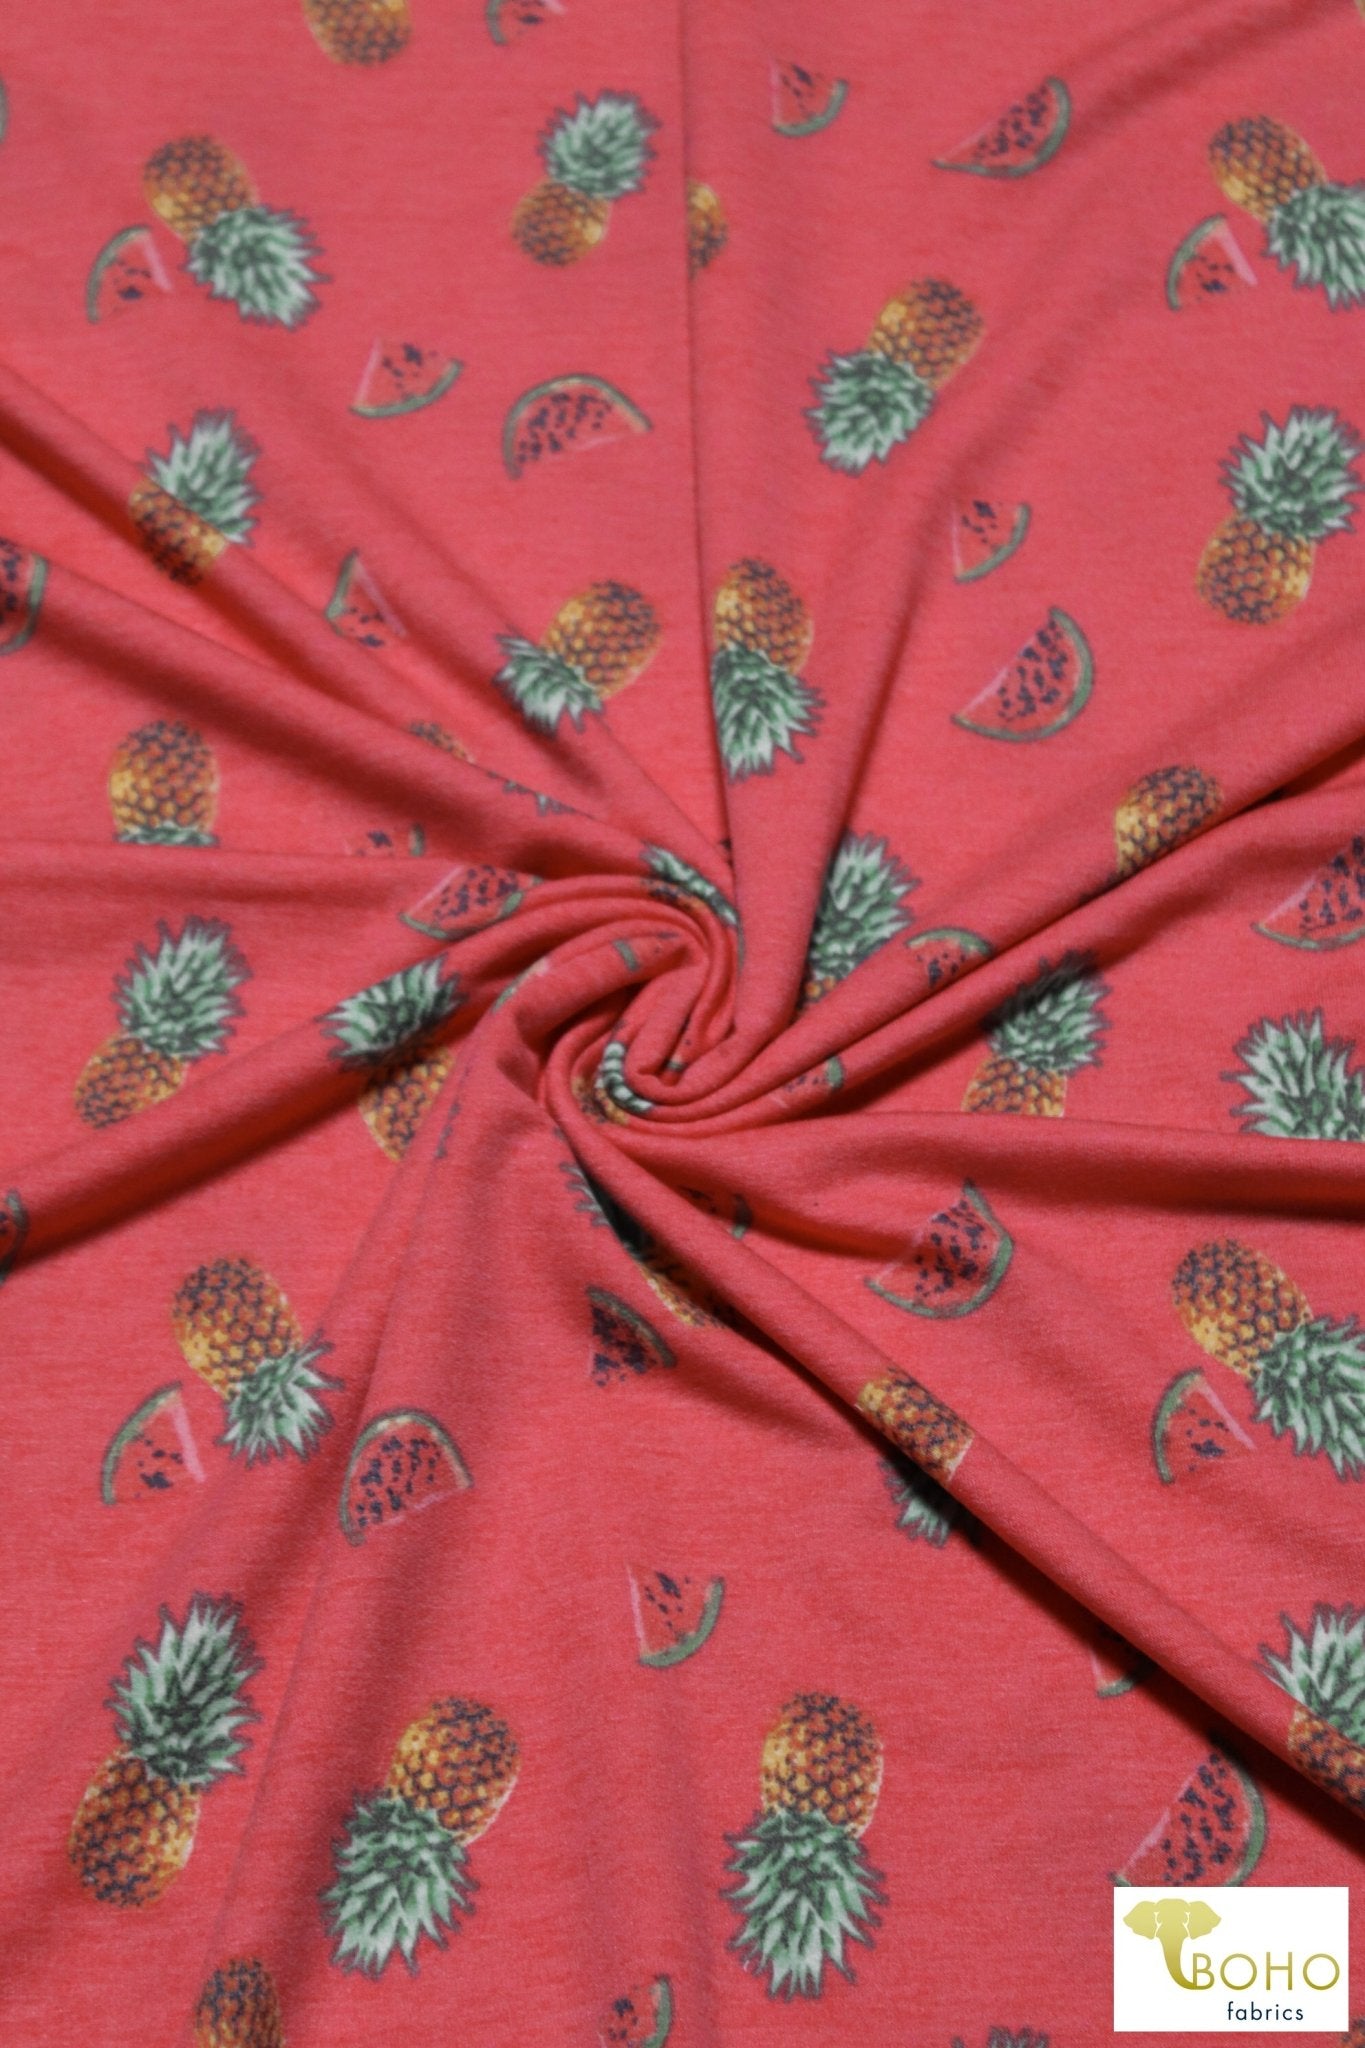 Pineapples & Watermelon, French Terry Knit Print. FTP-329 - Boho Fabrics